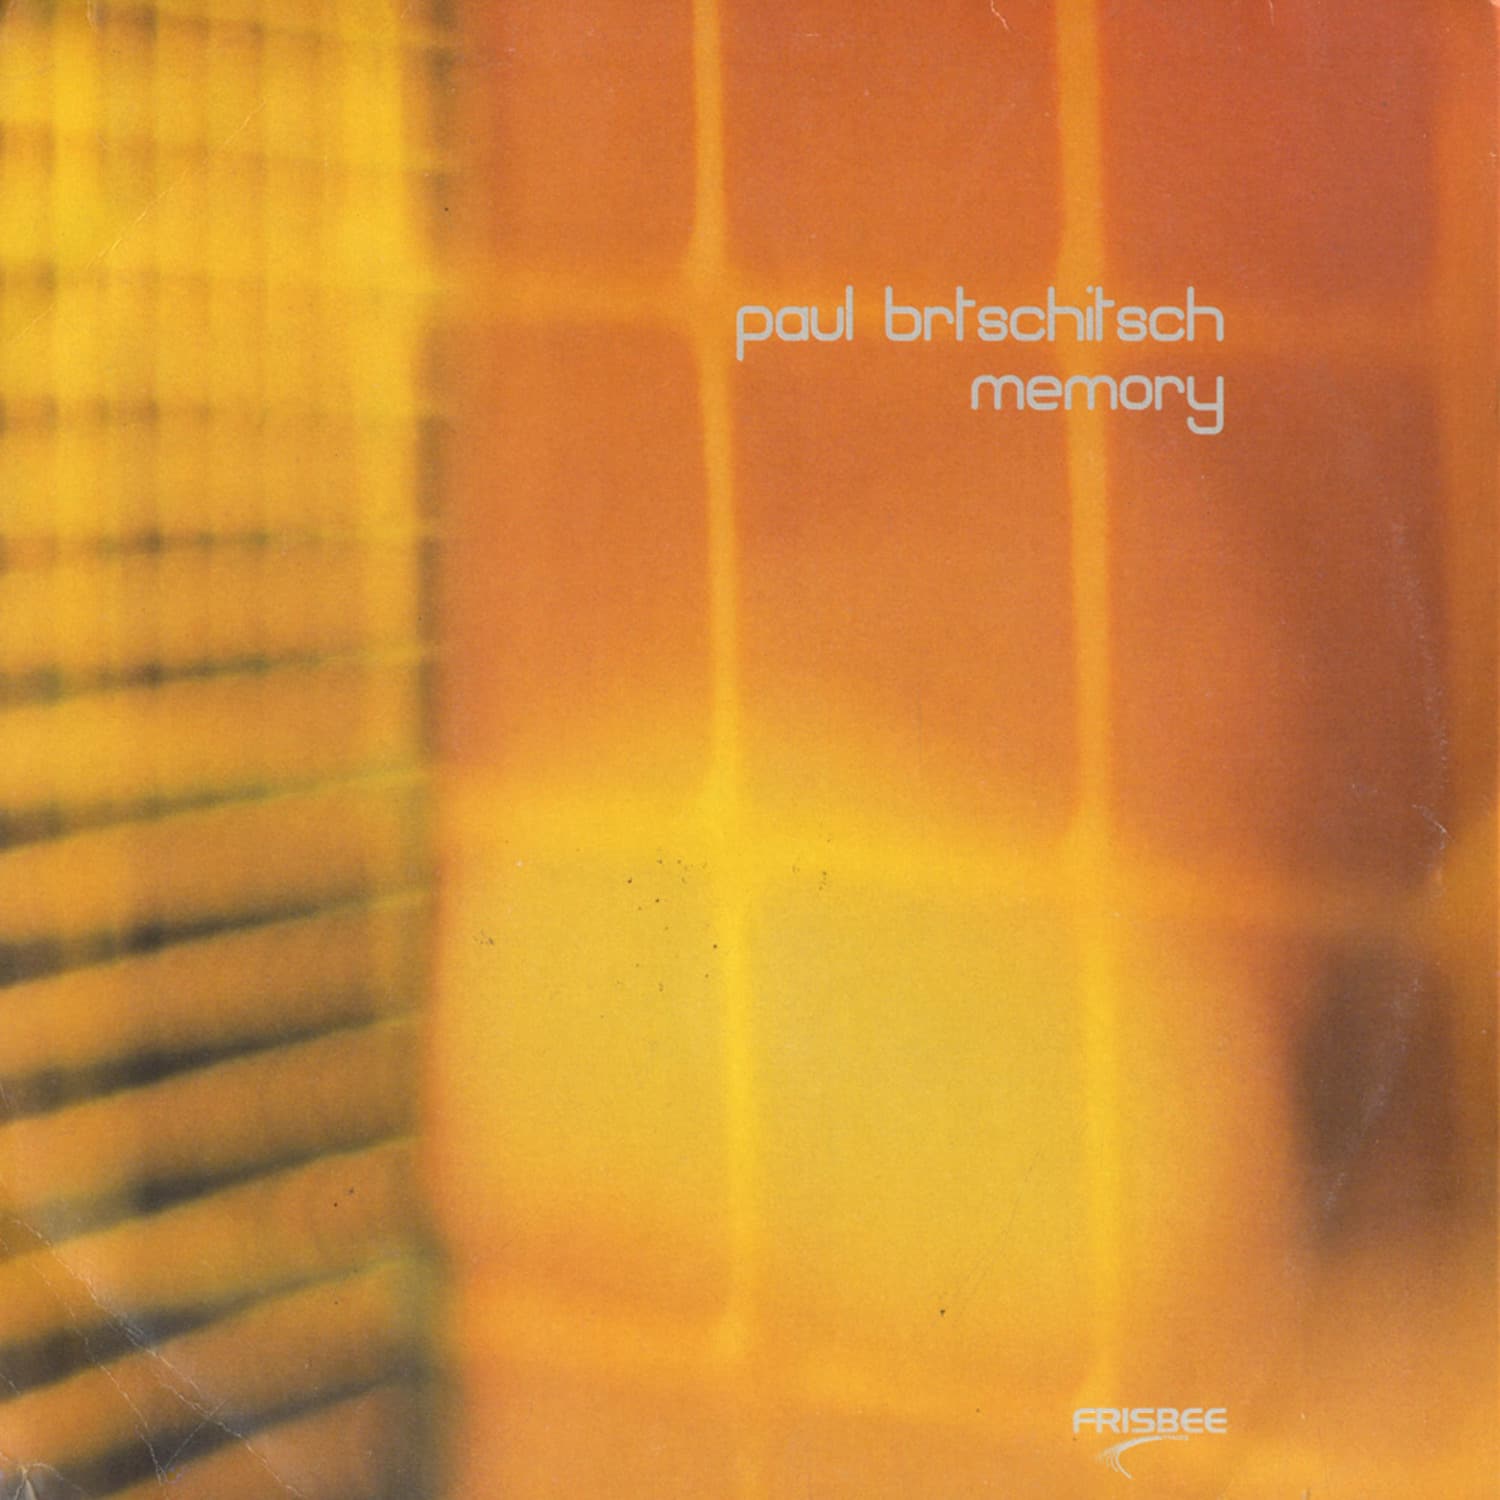 Paul Brtschitsch - MEMORY 